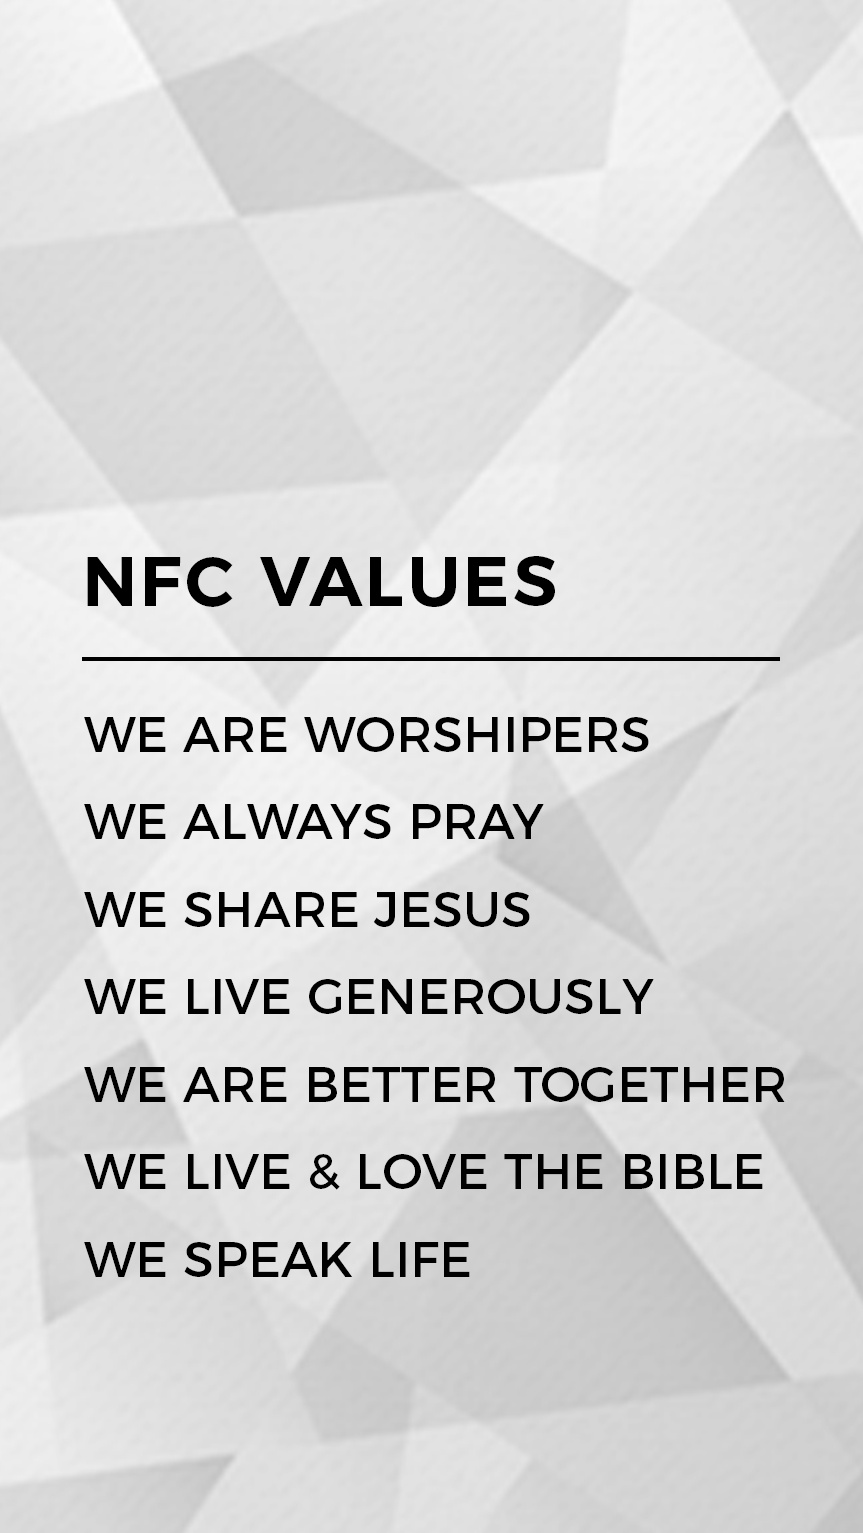 Northwest Family Church Values